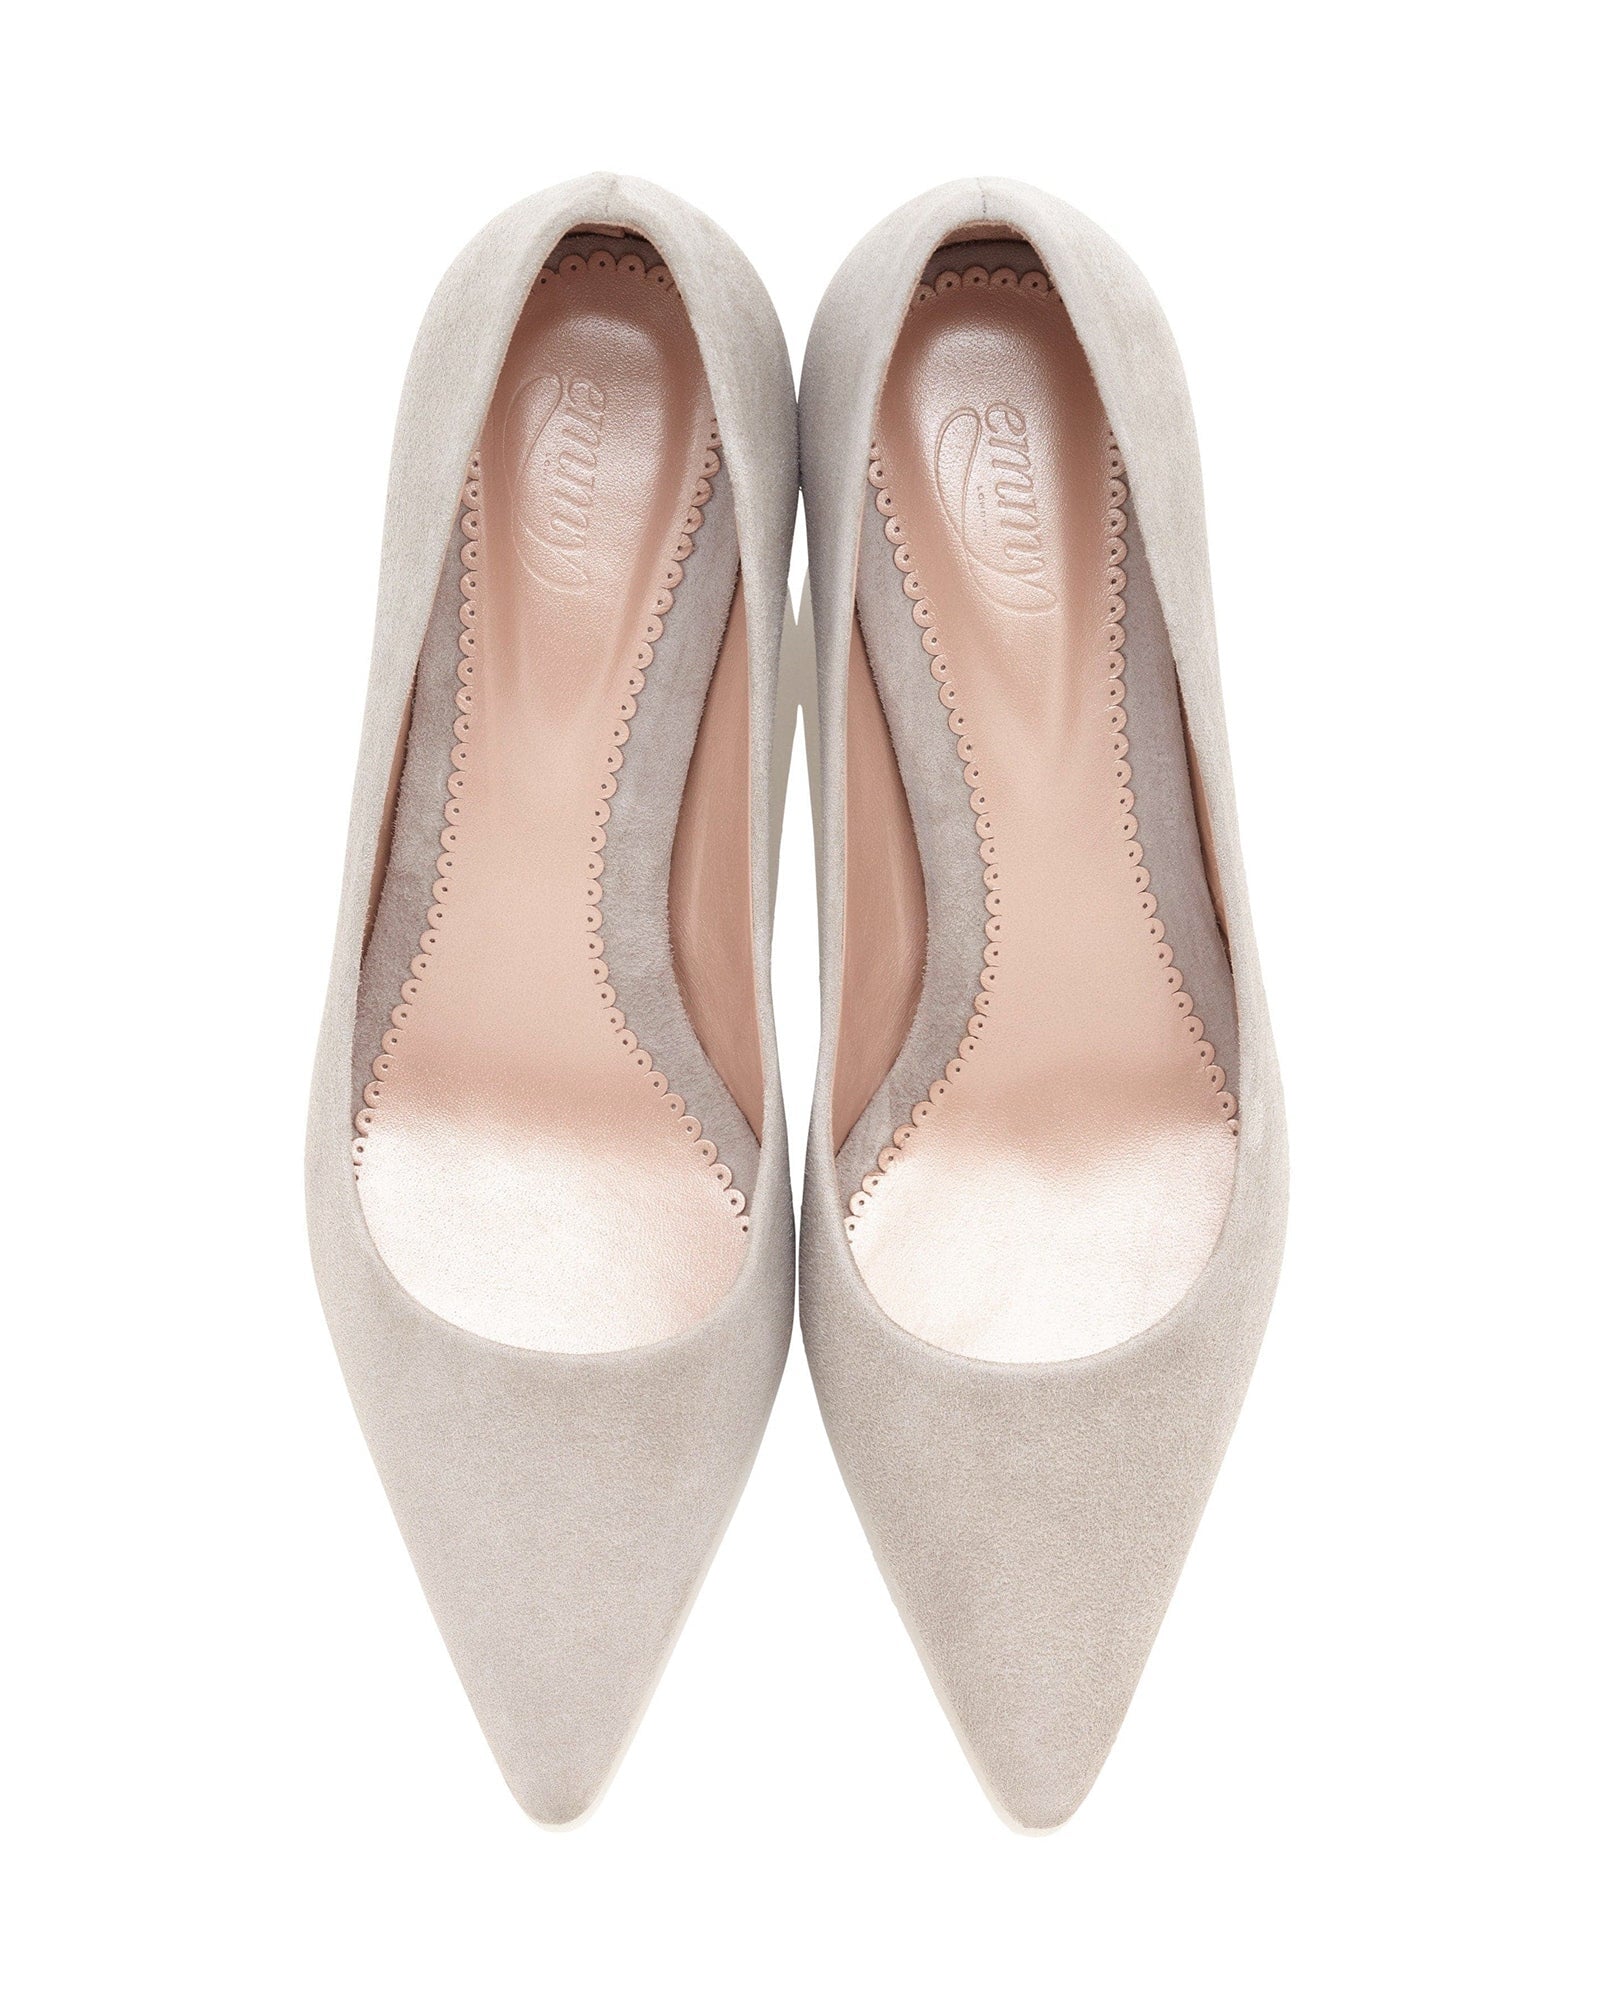 Olivia Kitten Vapour Fashion Shoe Grey Pointed Kitten Heel Court Shoes  image